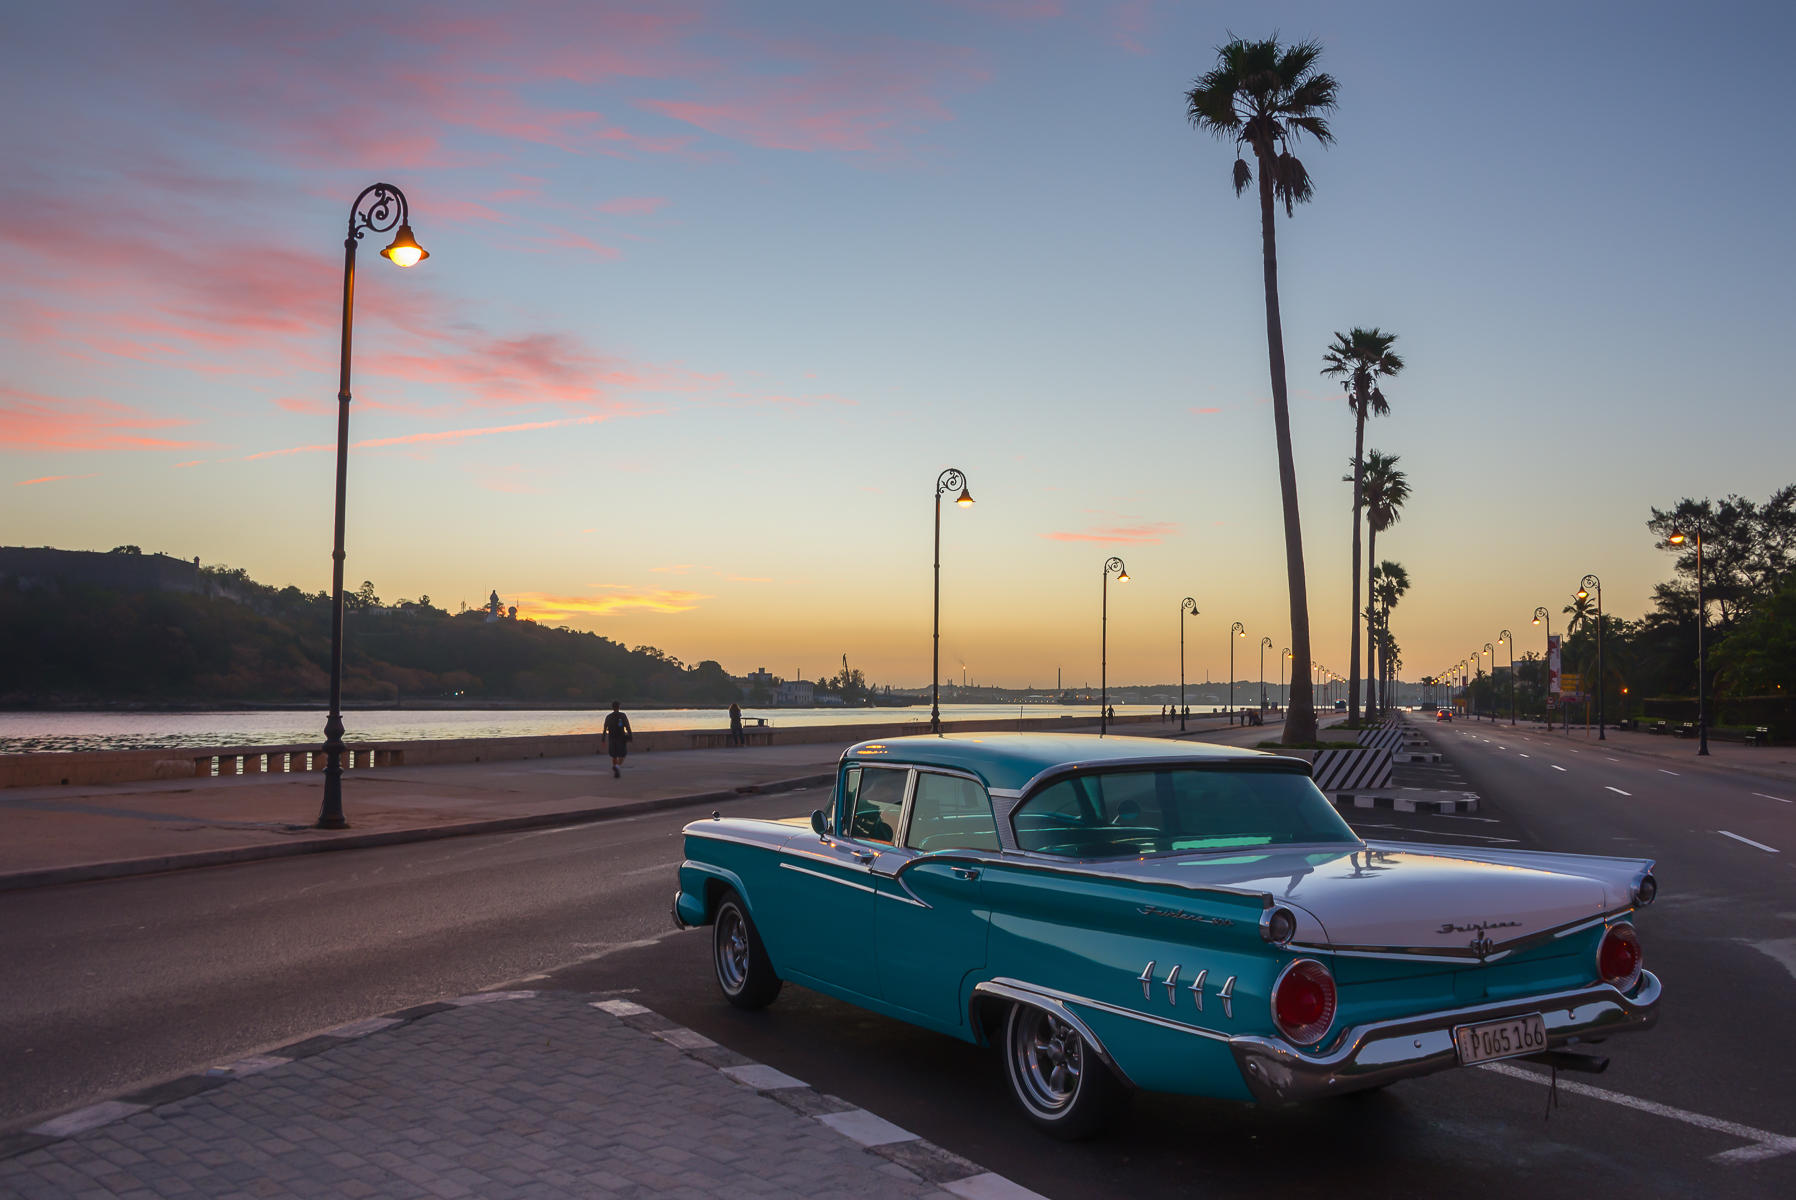 My Ride : Cuba, Where Time Stands Still : ELIZABETH SANJUAN PHOTOGRAPHY